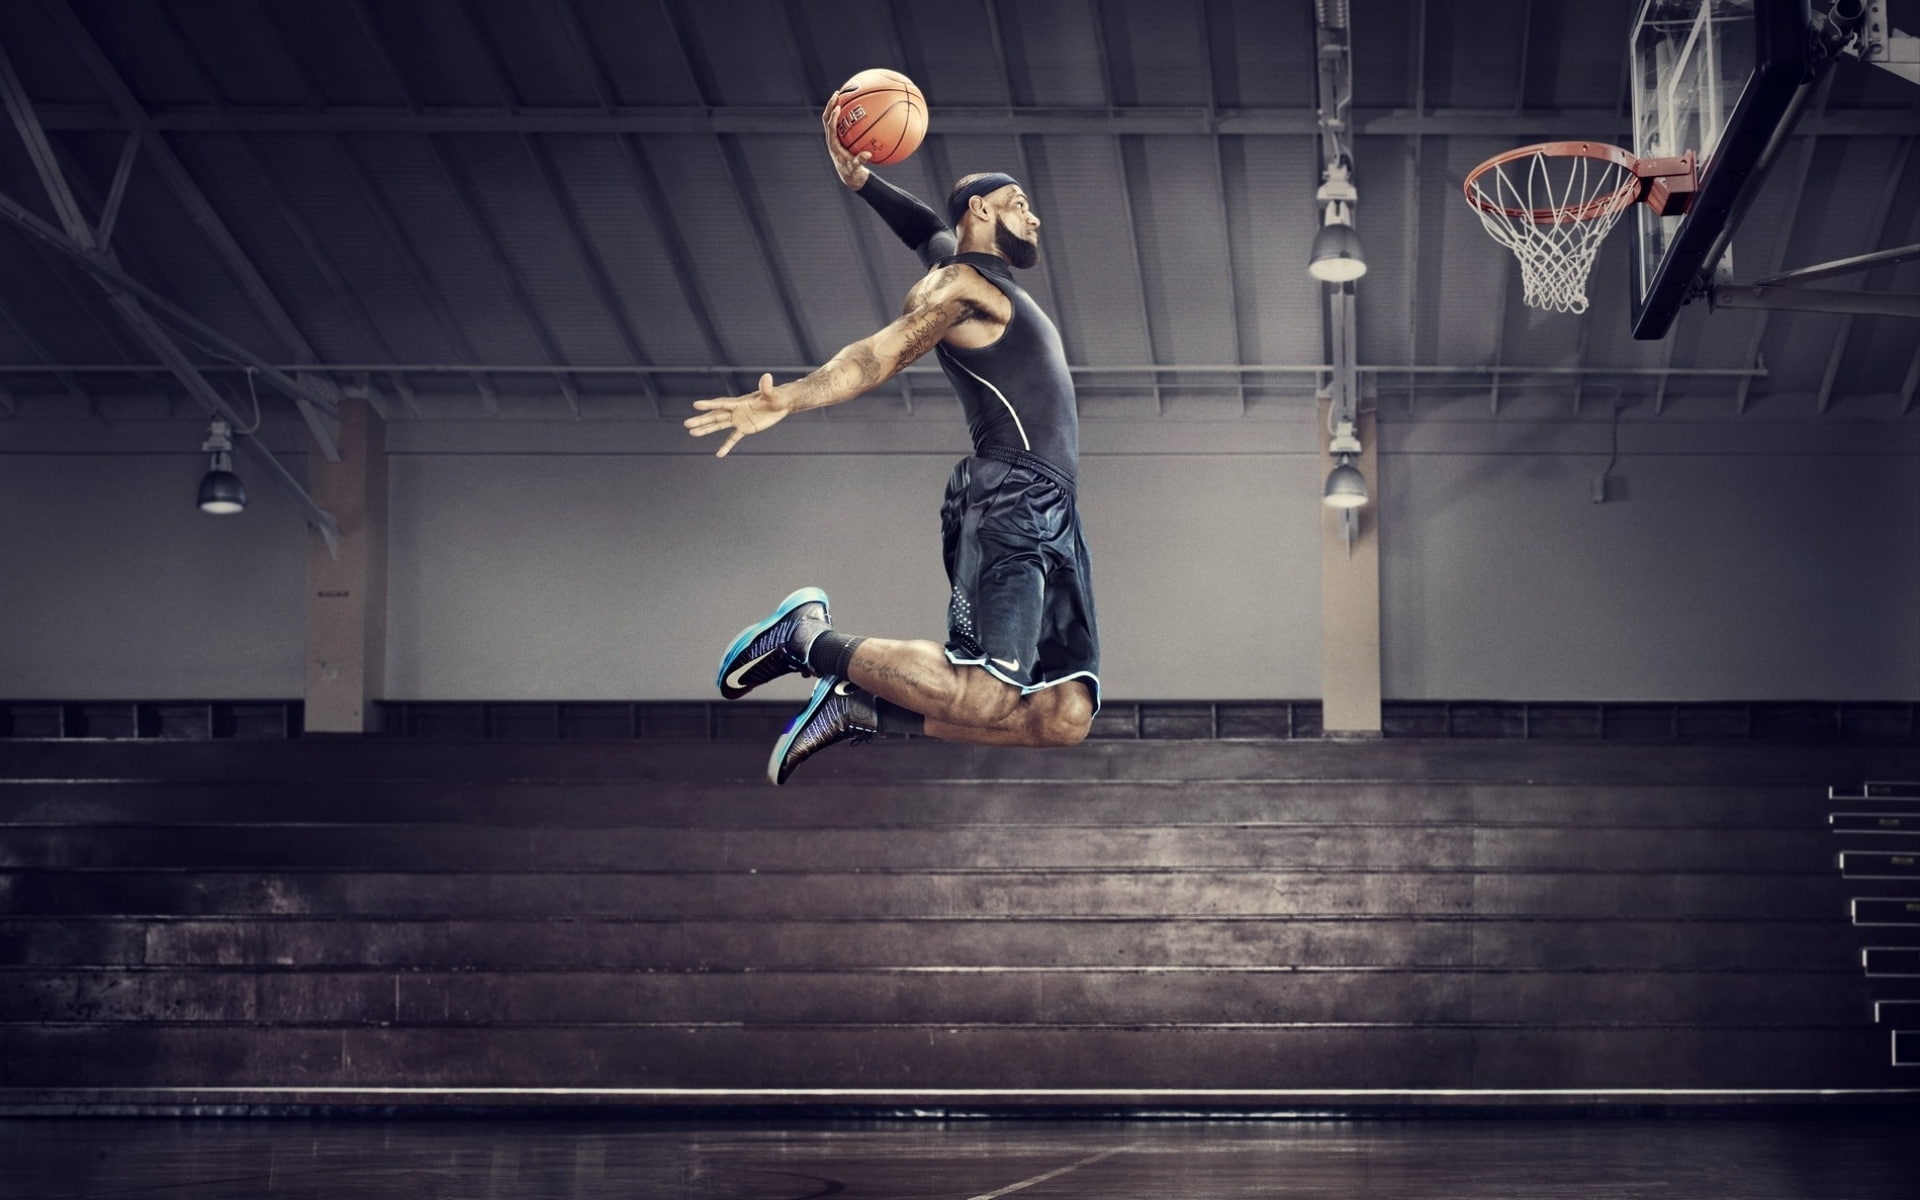 Basketball, lebron james, nba, nike, jumping, mid-air, sport